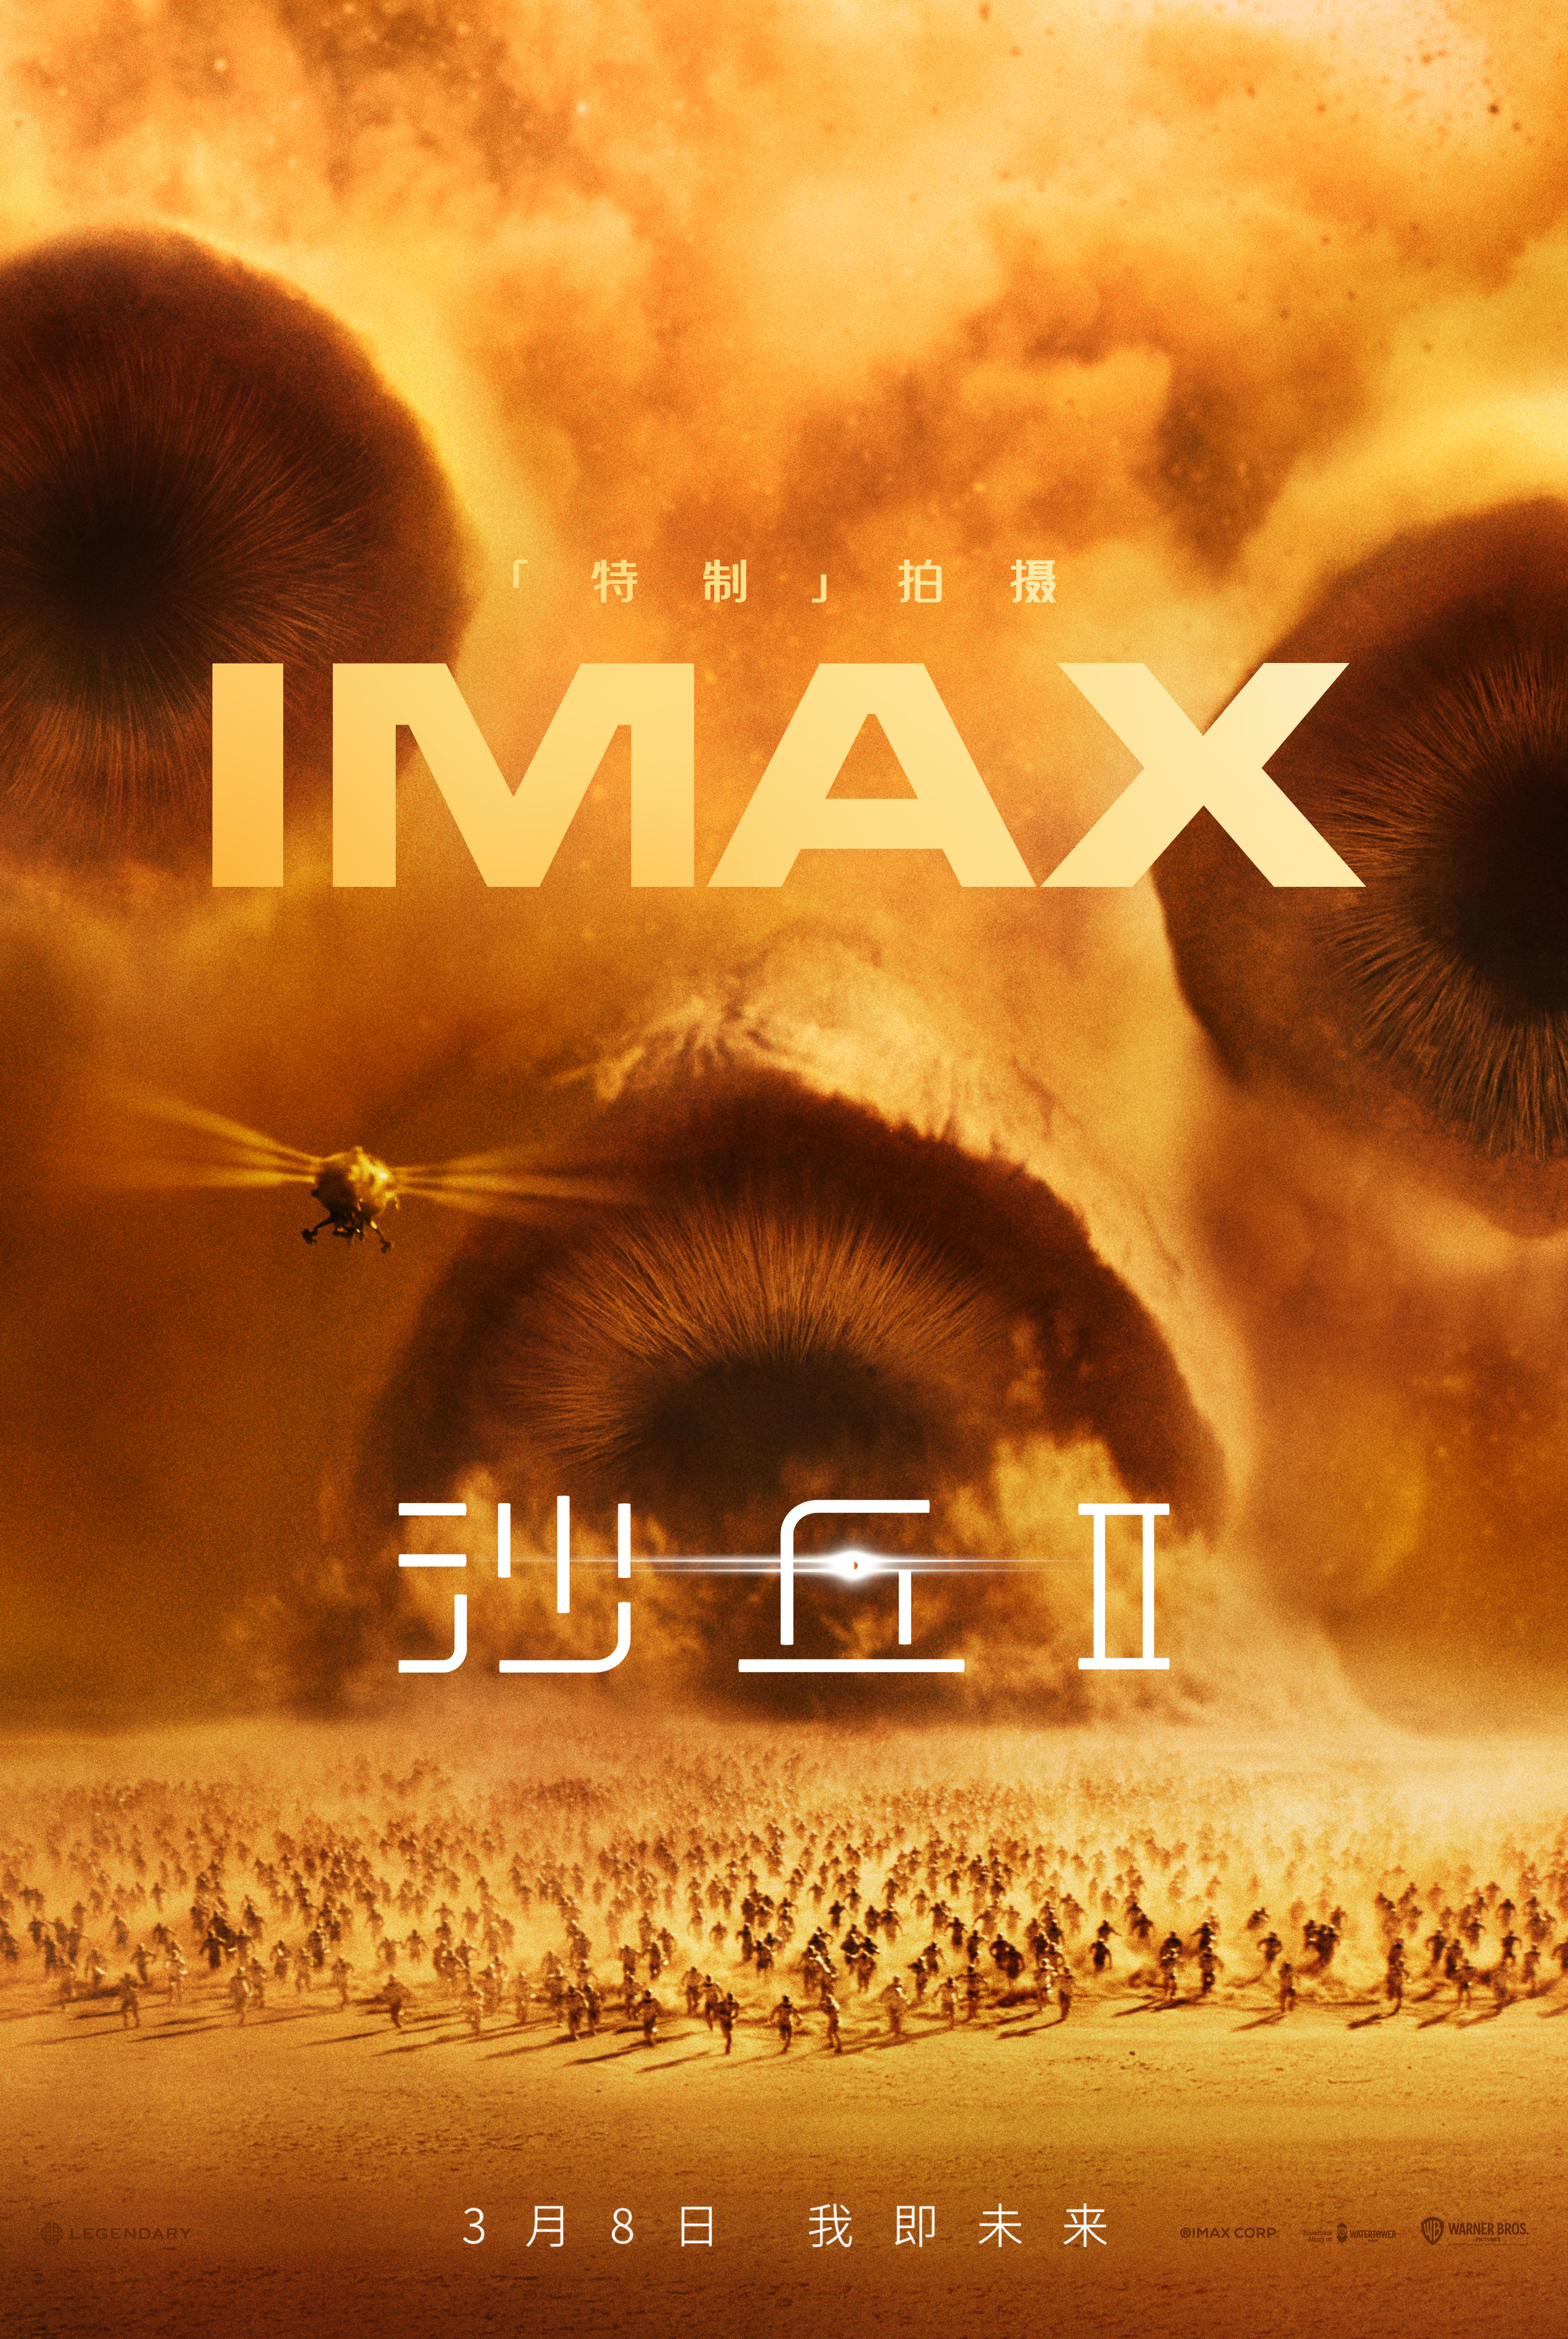 IMAX发布《沙丘2》专属海报 3月8日IMAX特制拍摄续写传奇篇章